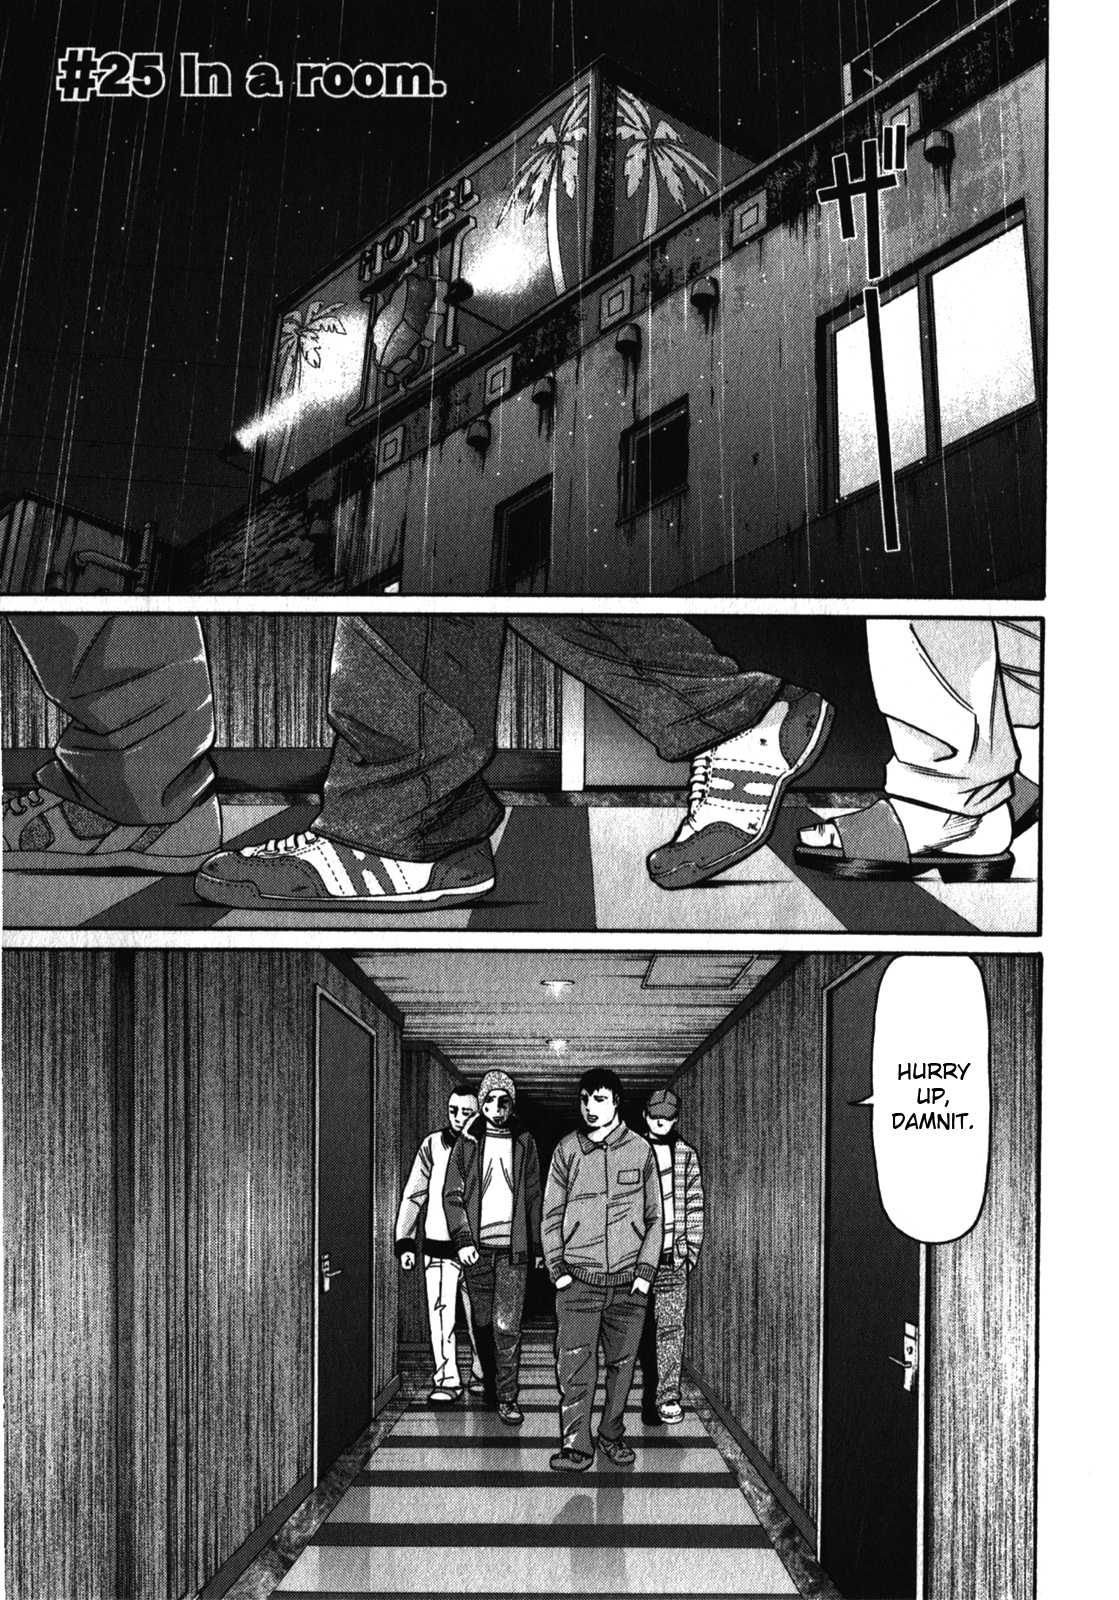 Tokyo Yamimushi Vol. 3 Ch. 25 In a room.